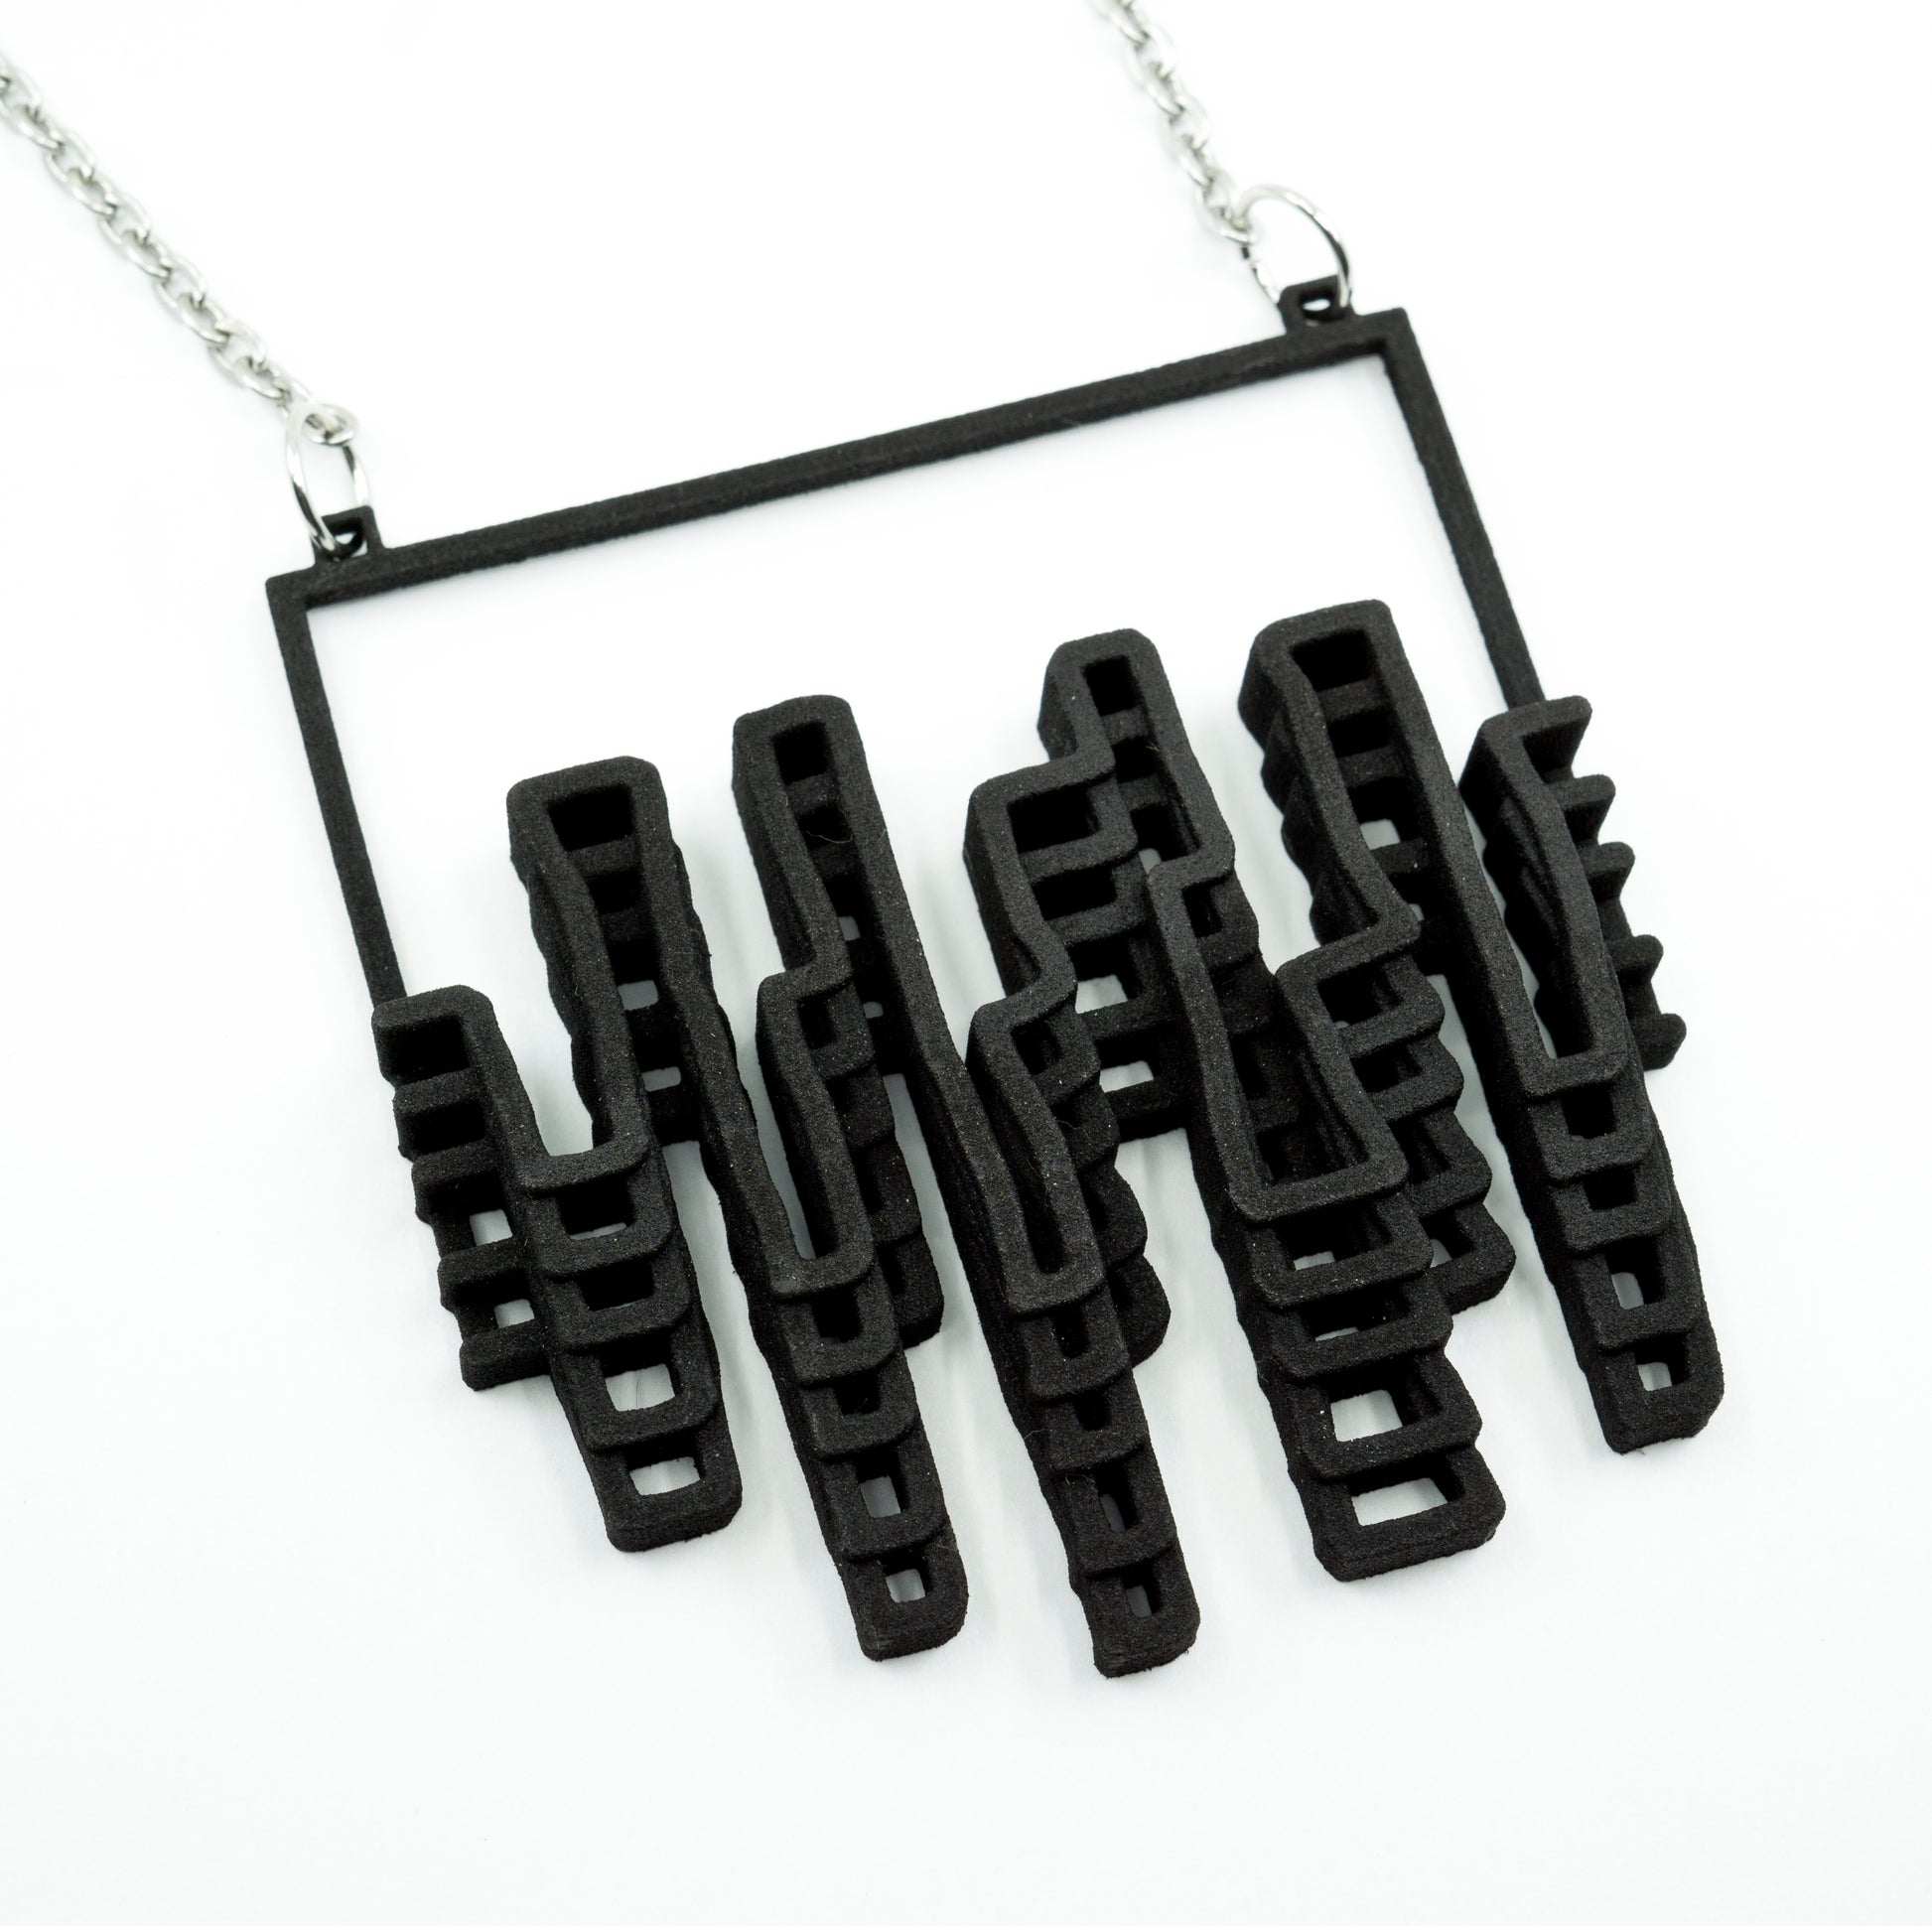 3D Printed Black Plastic Alleys Pendant